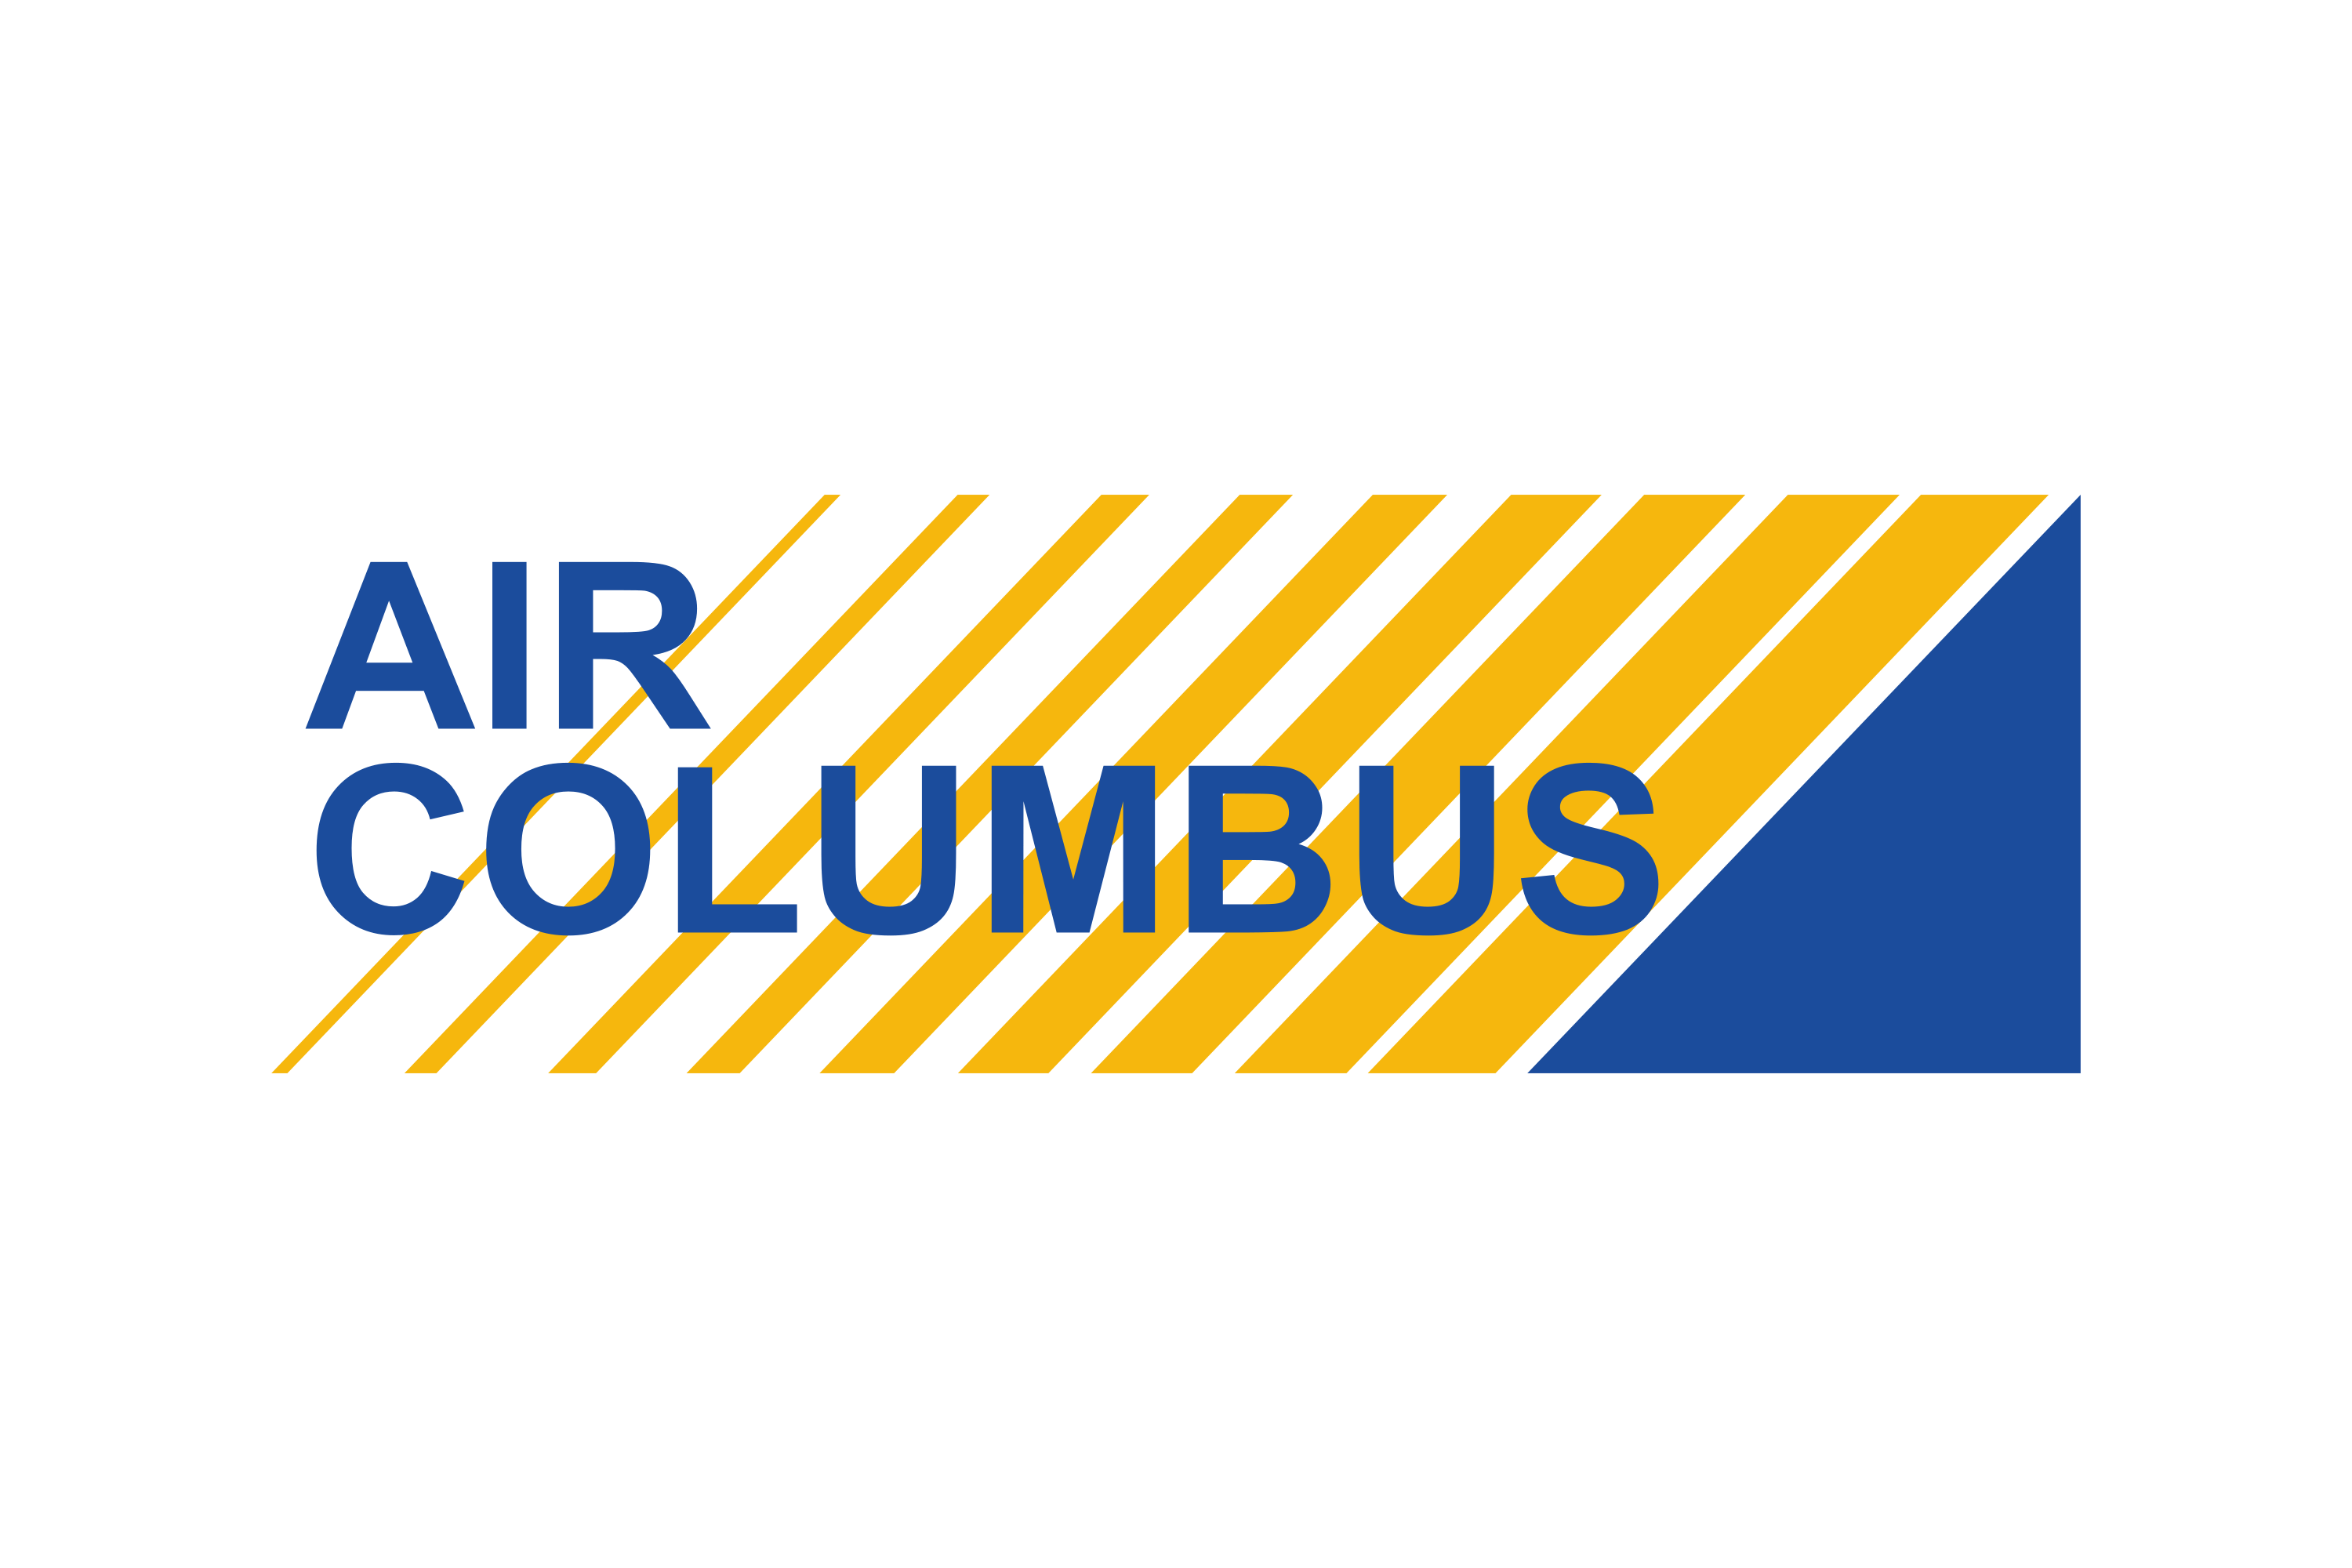 Air Columbus Logo